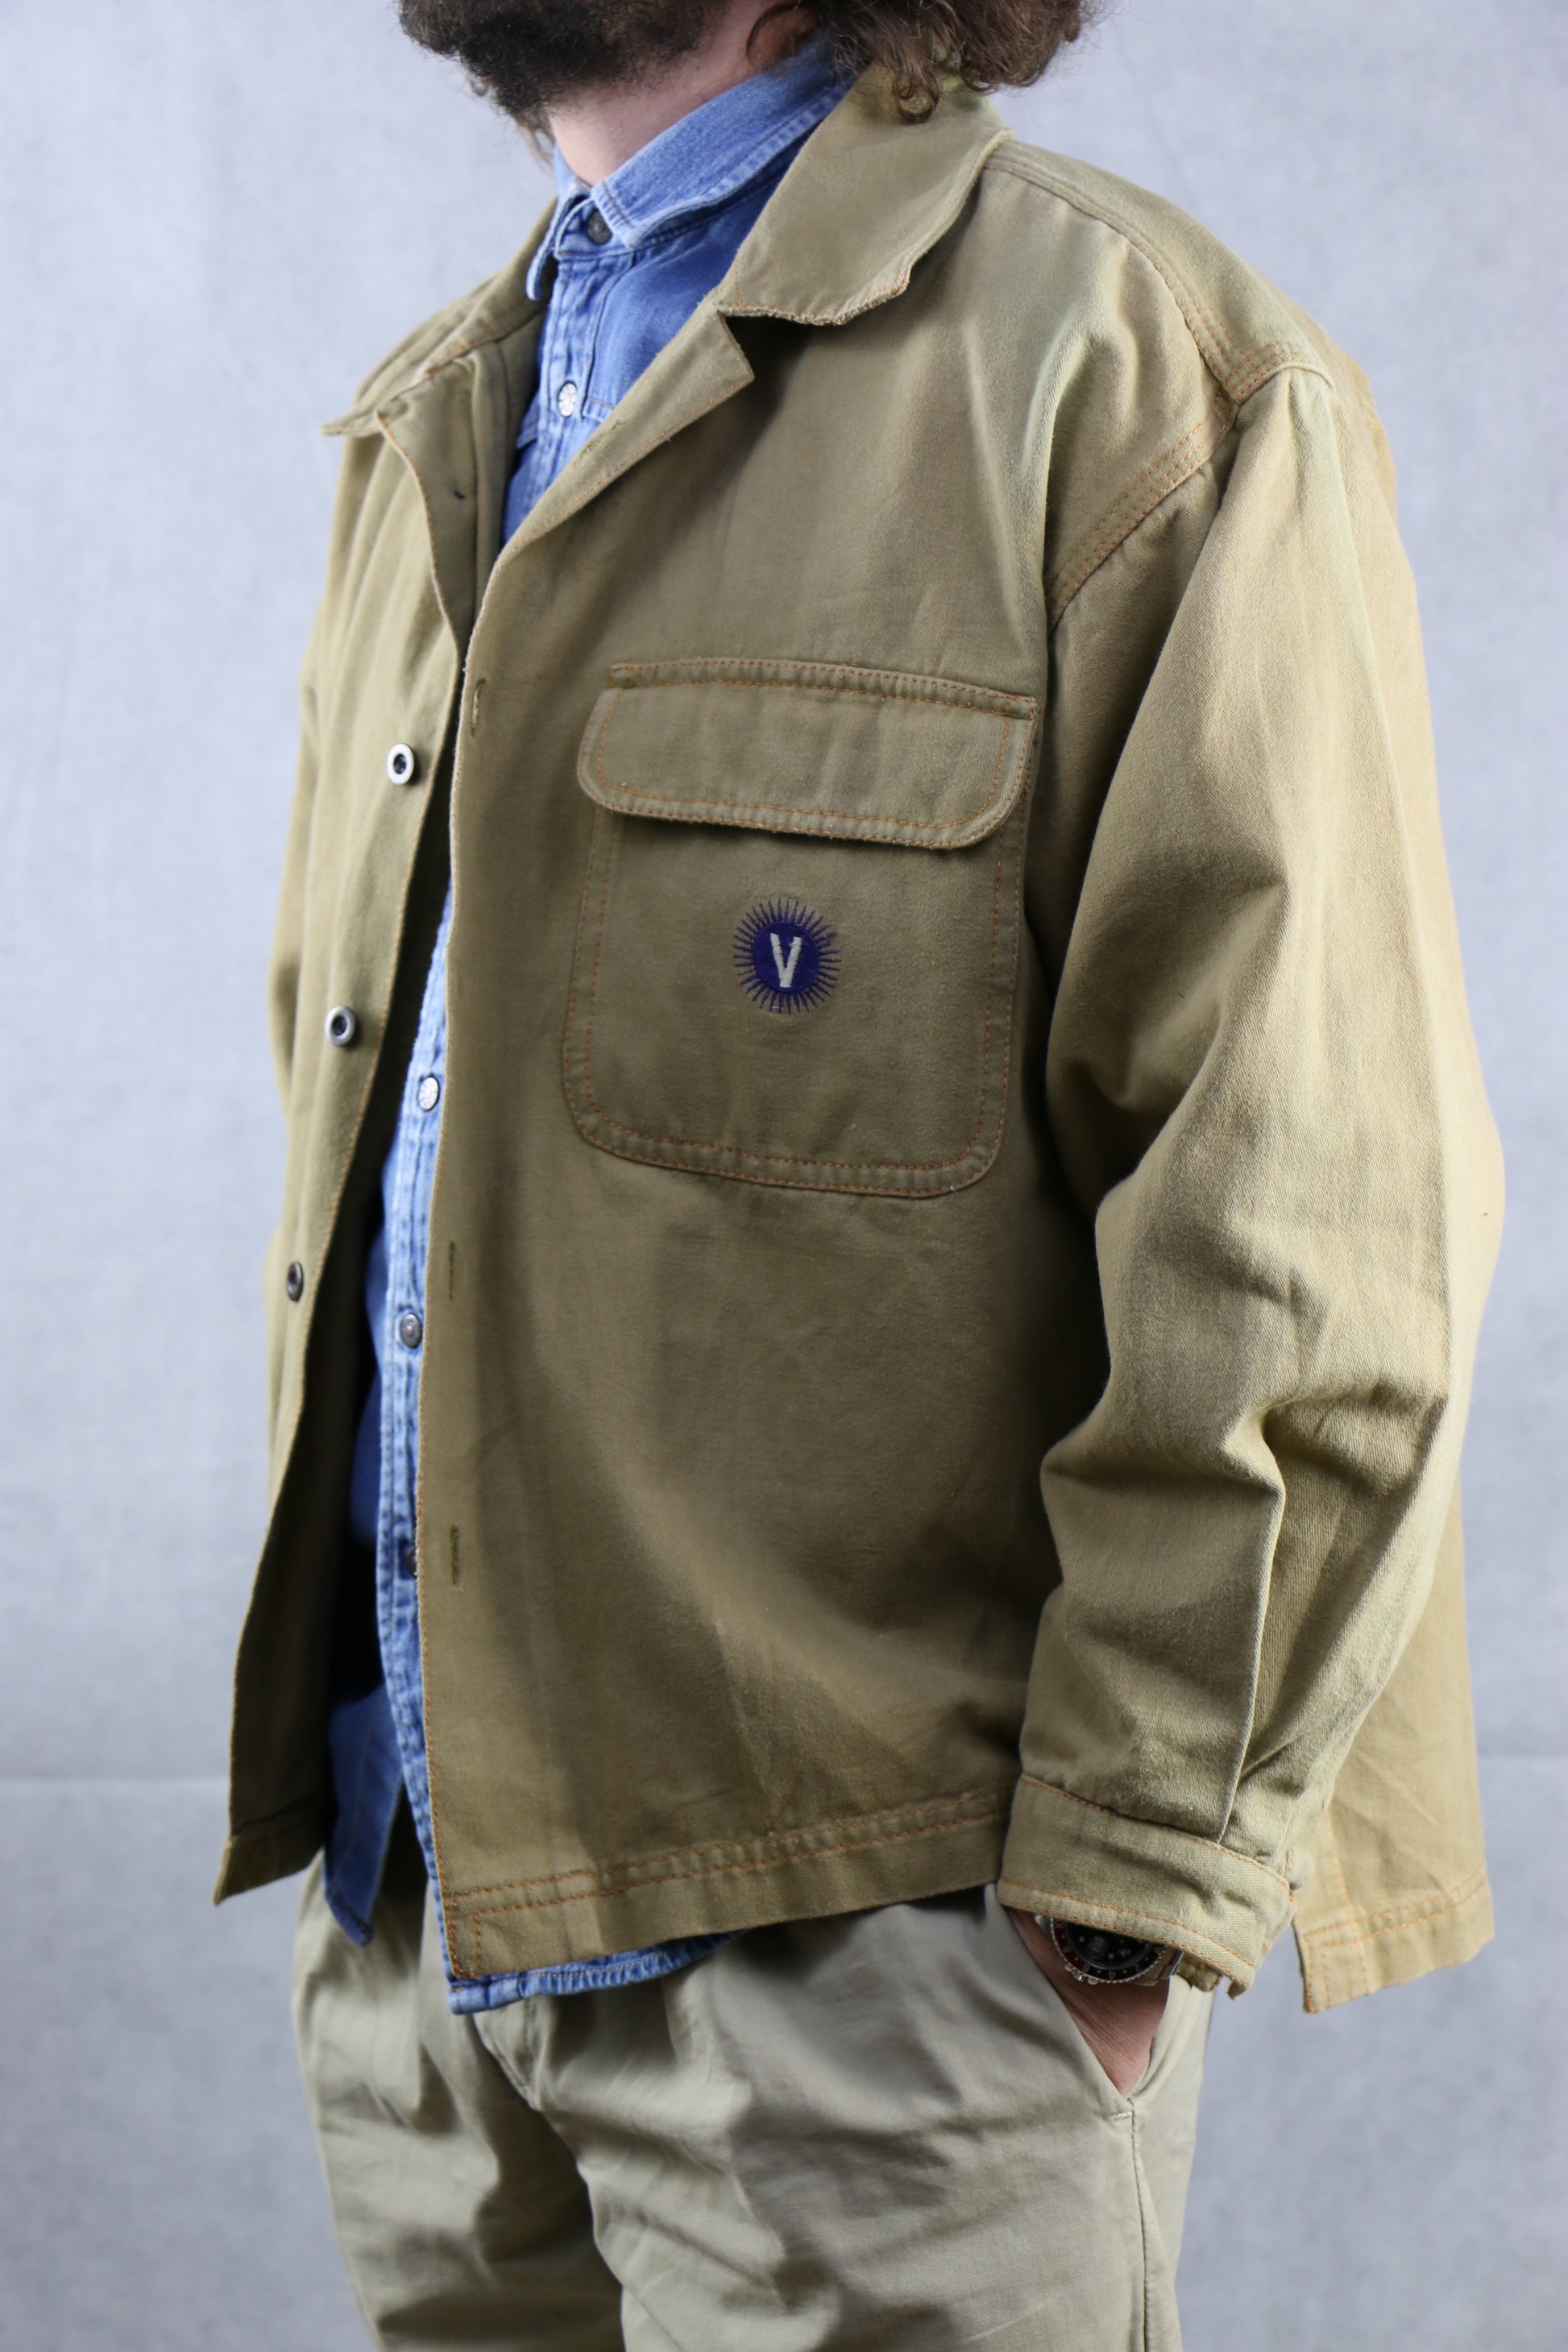 Vision Street Wear Work Shirt - vintage clothing clochard92.com